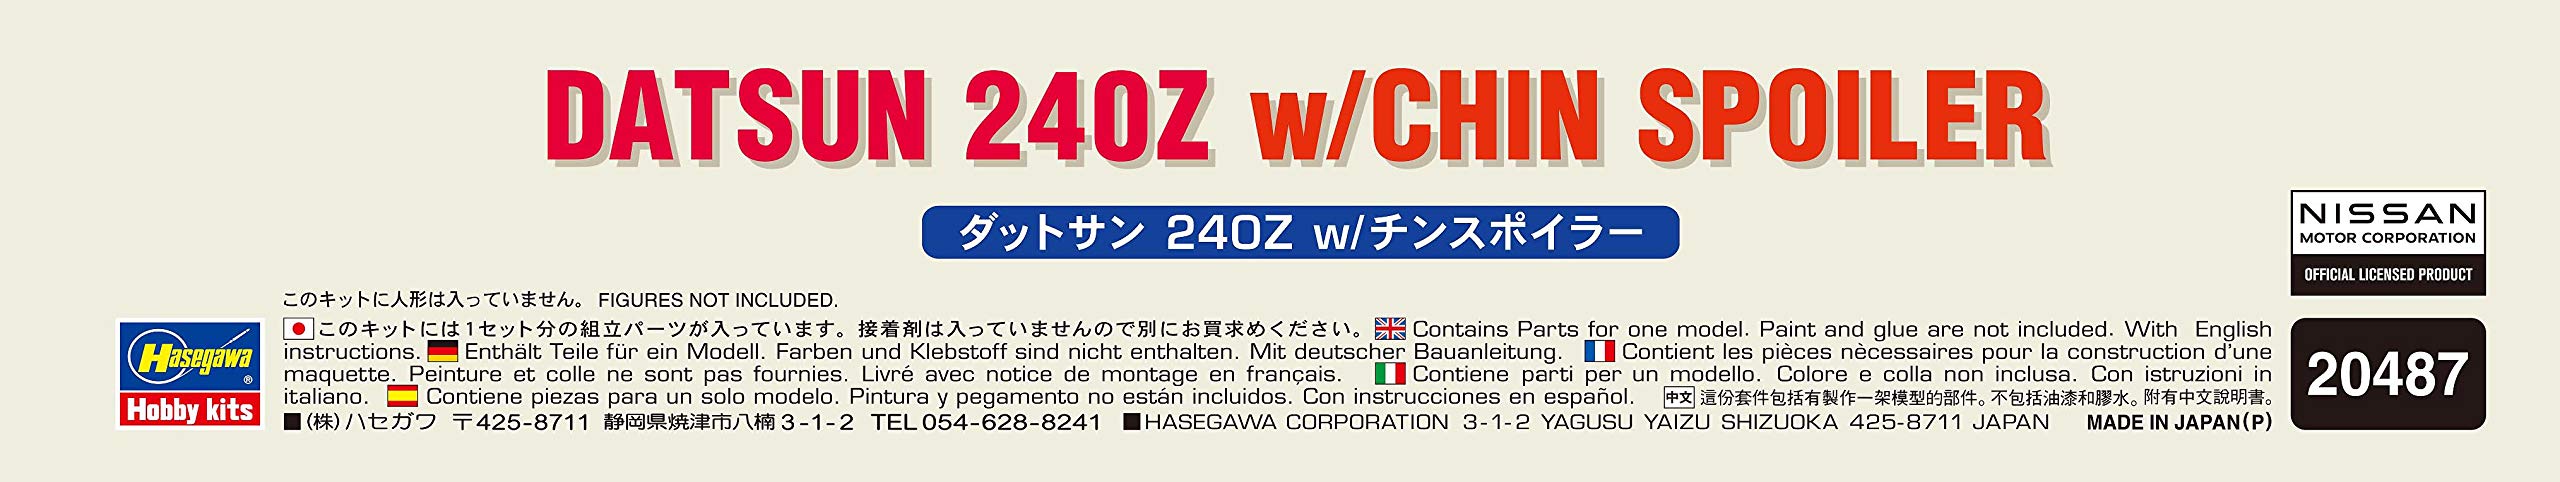 Hasegawa 1/24 Datsun 240Z W/Chin Spoiler Plastic Model 20487